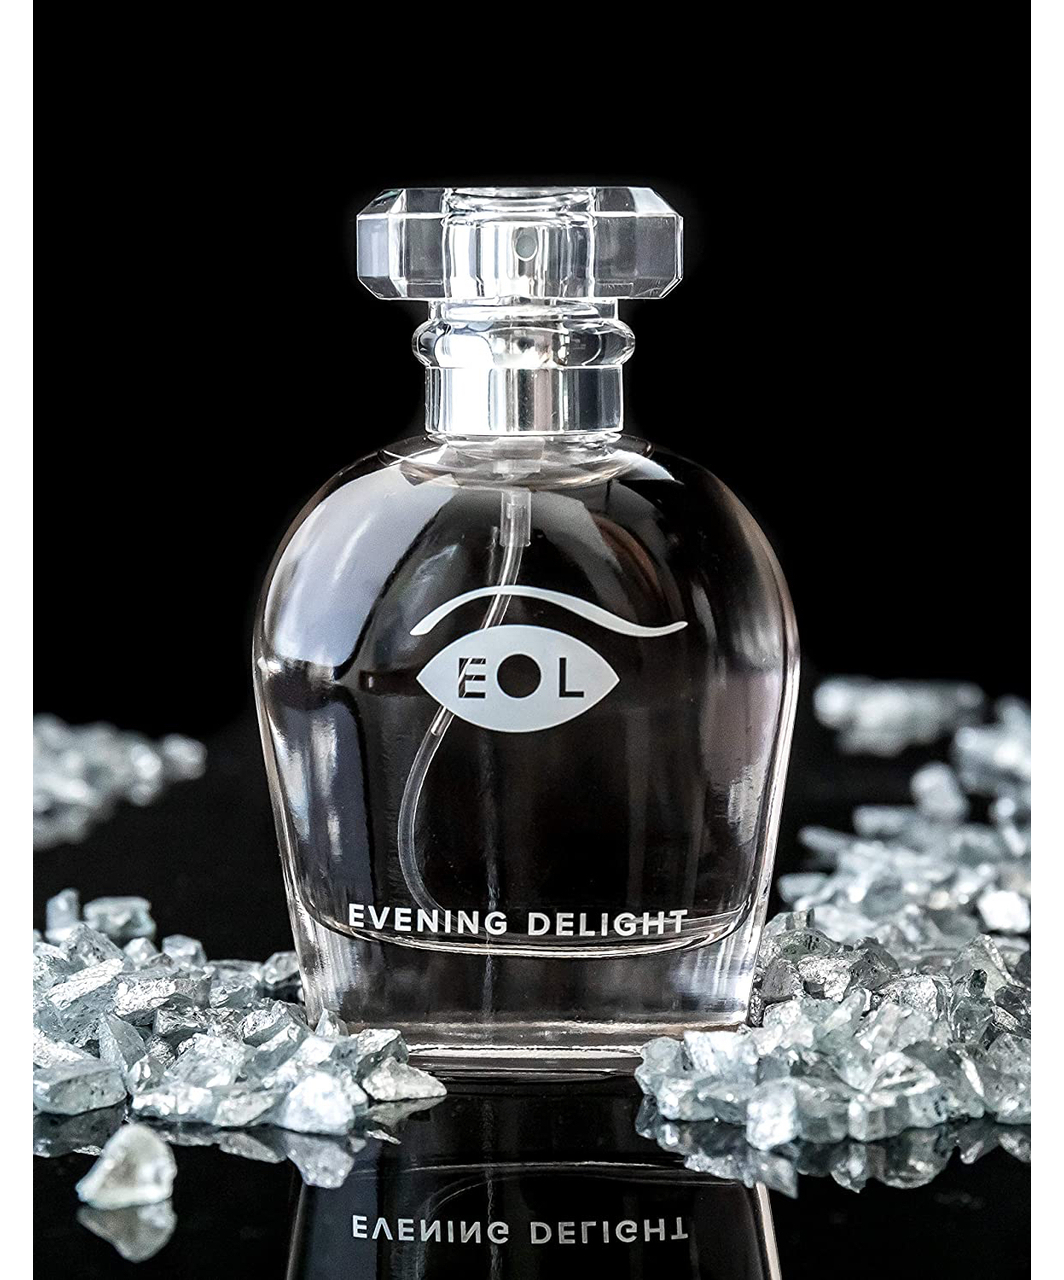 Eye Of Love Evening Delight Pheromone Parfum for Her to Attract Men (50 ml)